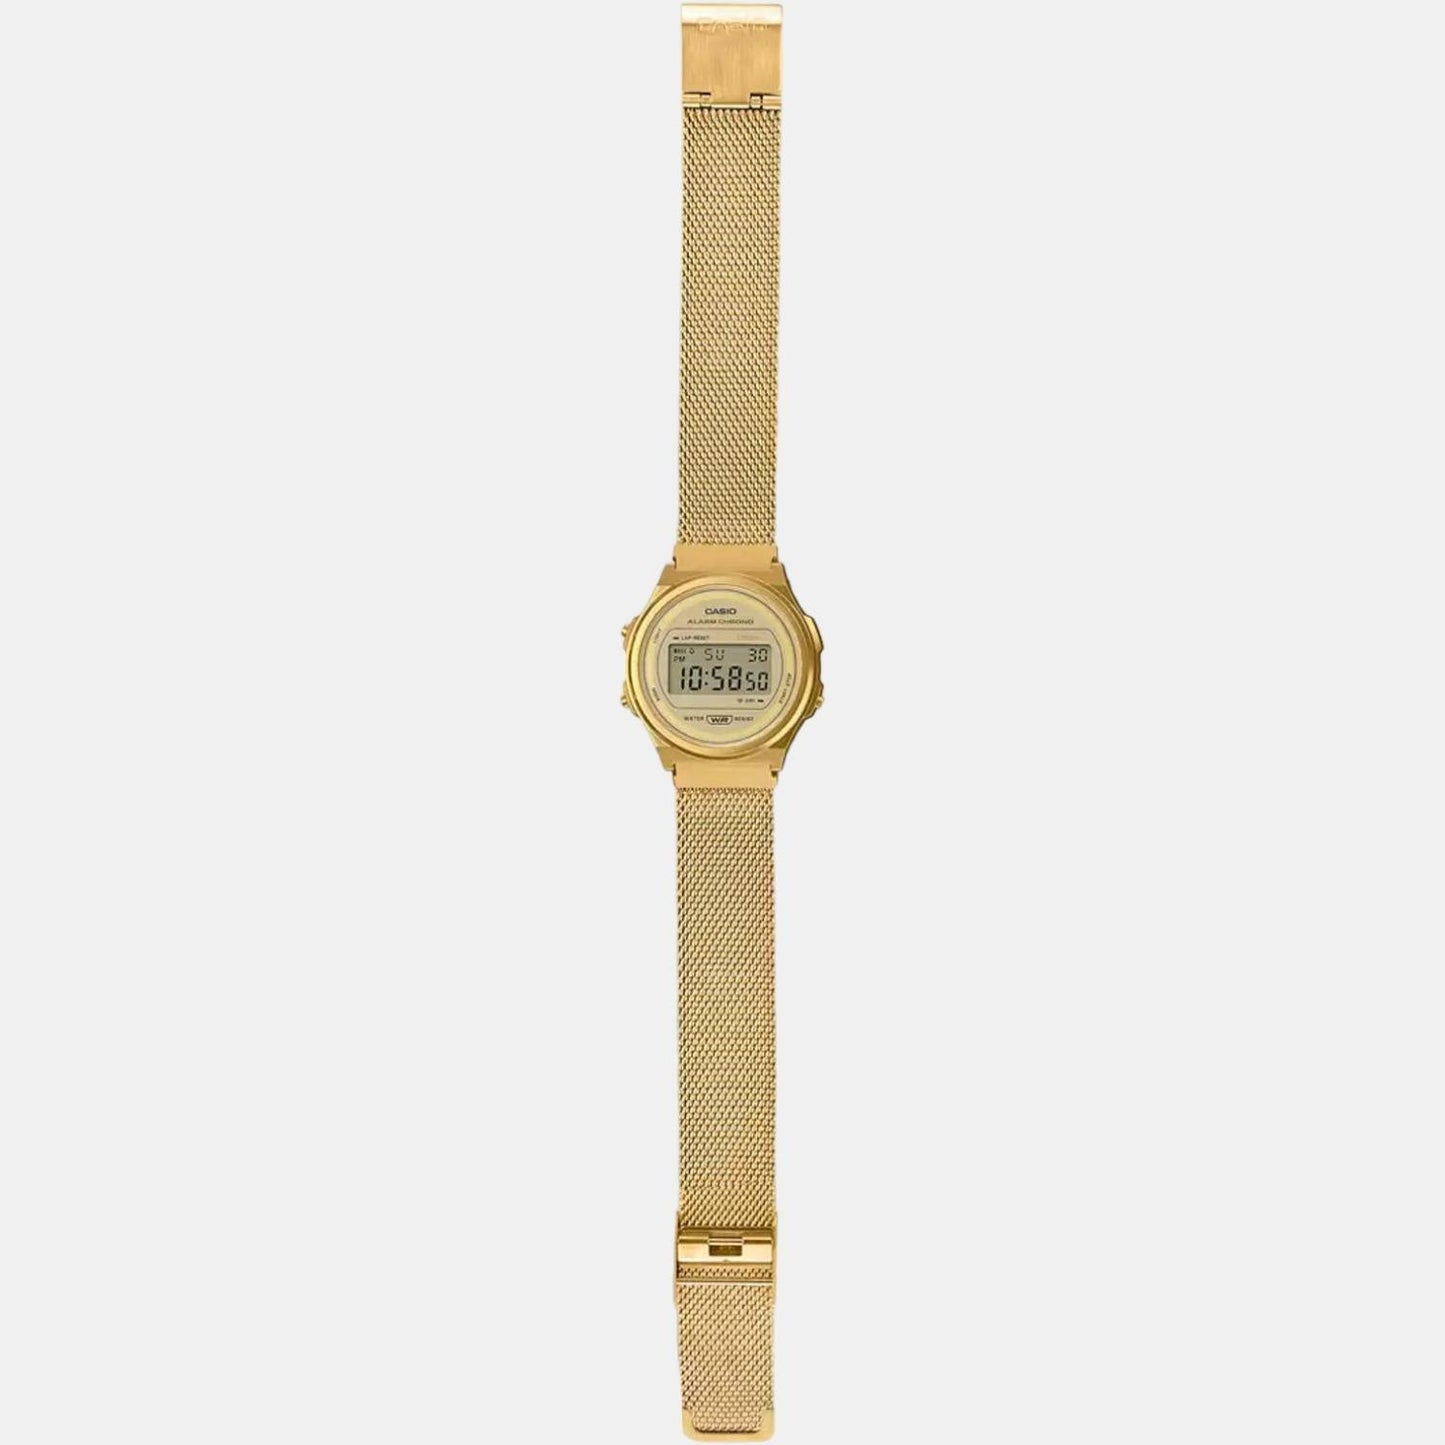 casio-resin-gold-digital-unisex-watch-d226